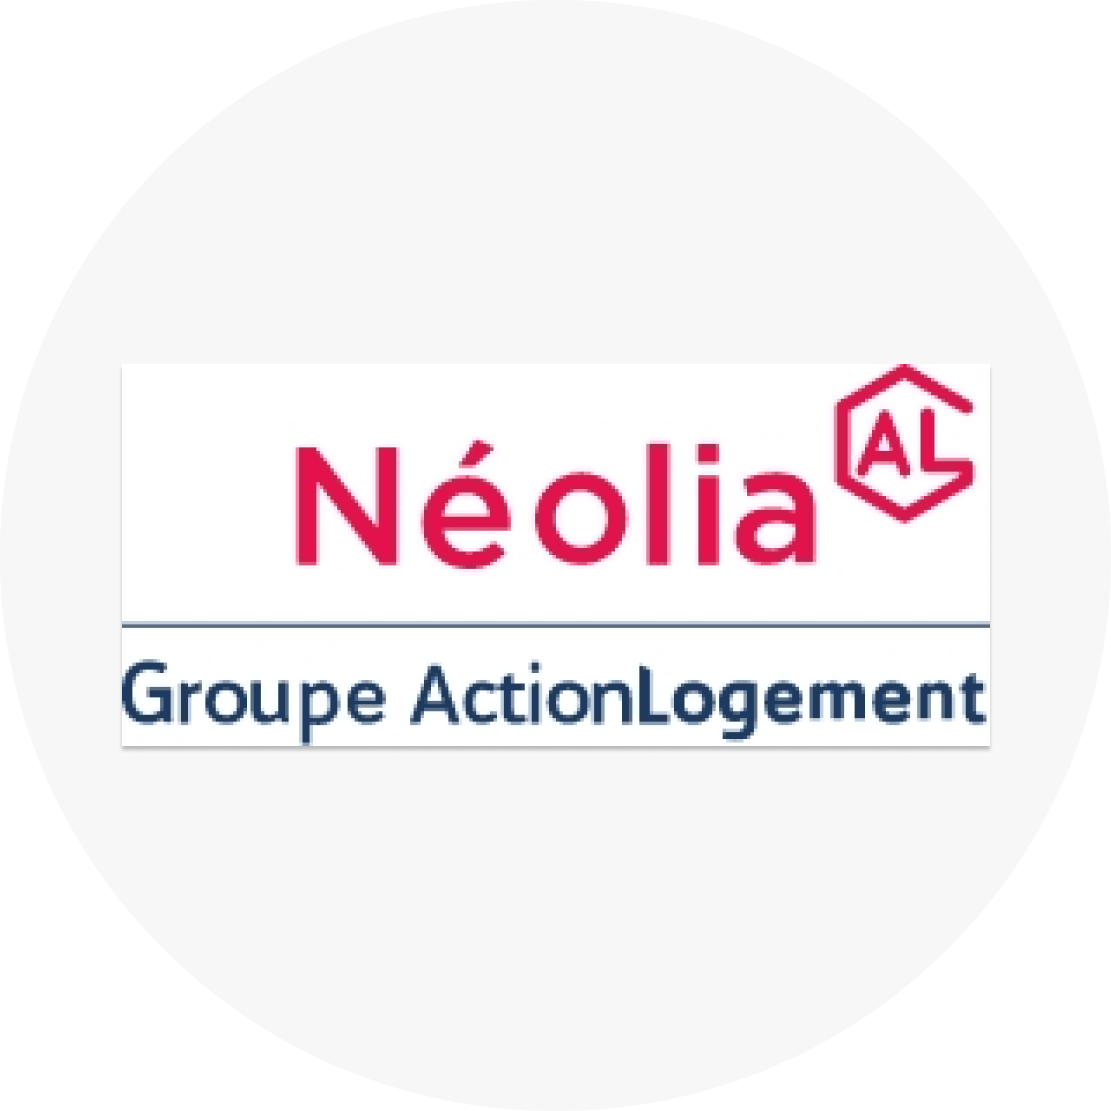 neolia logo